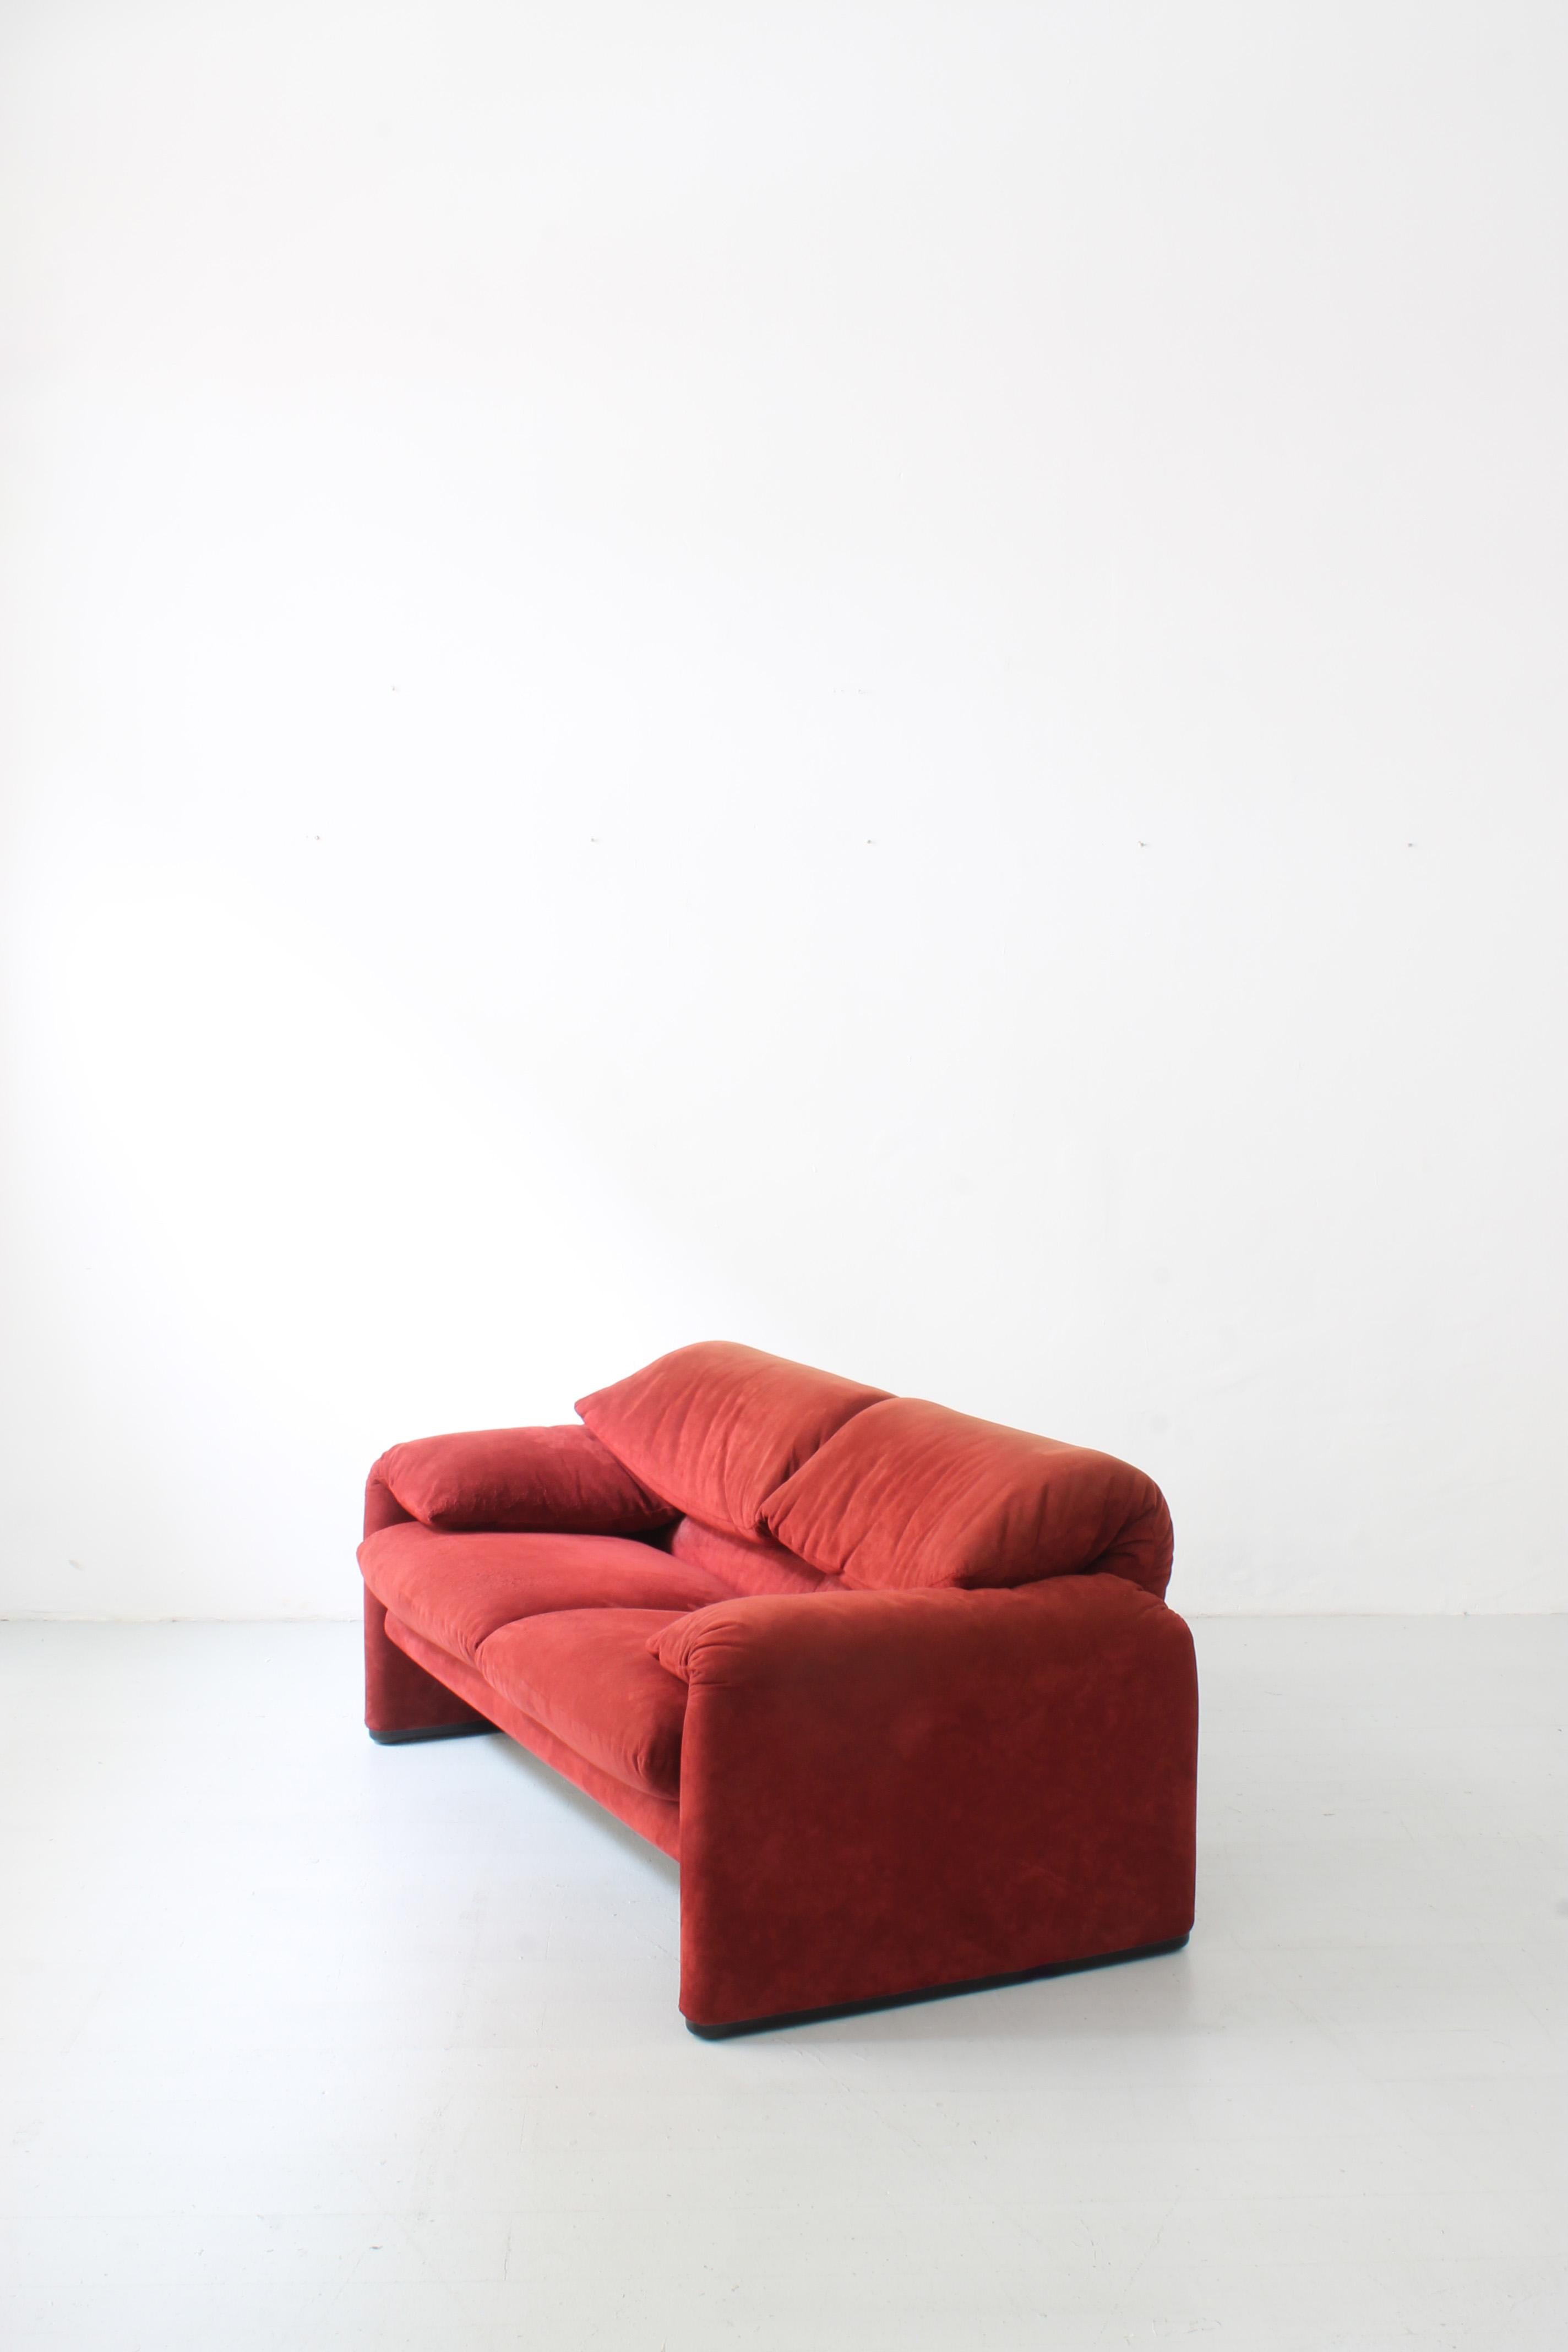 red vintage sofa